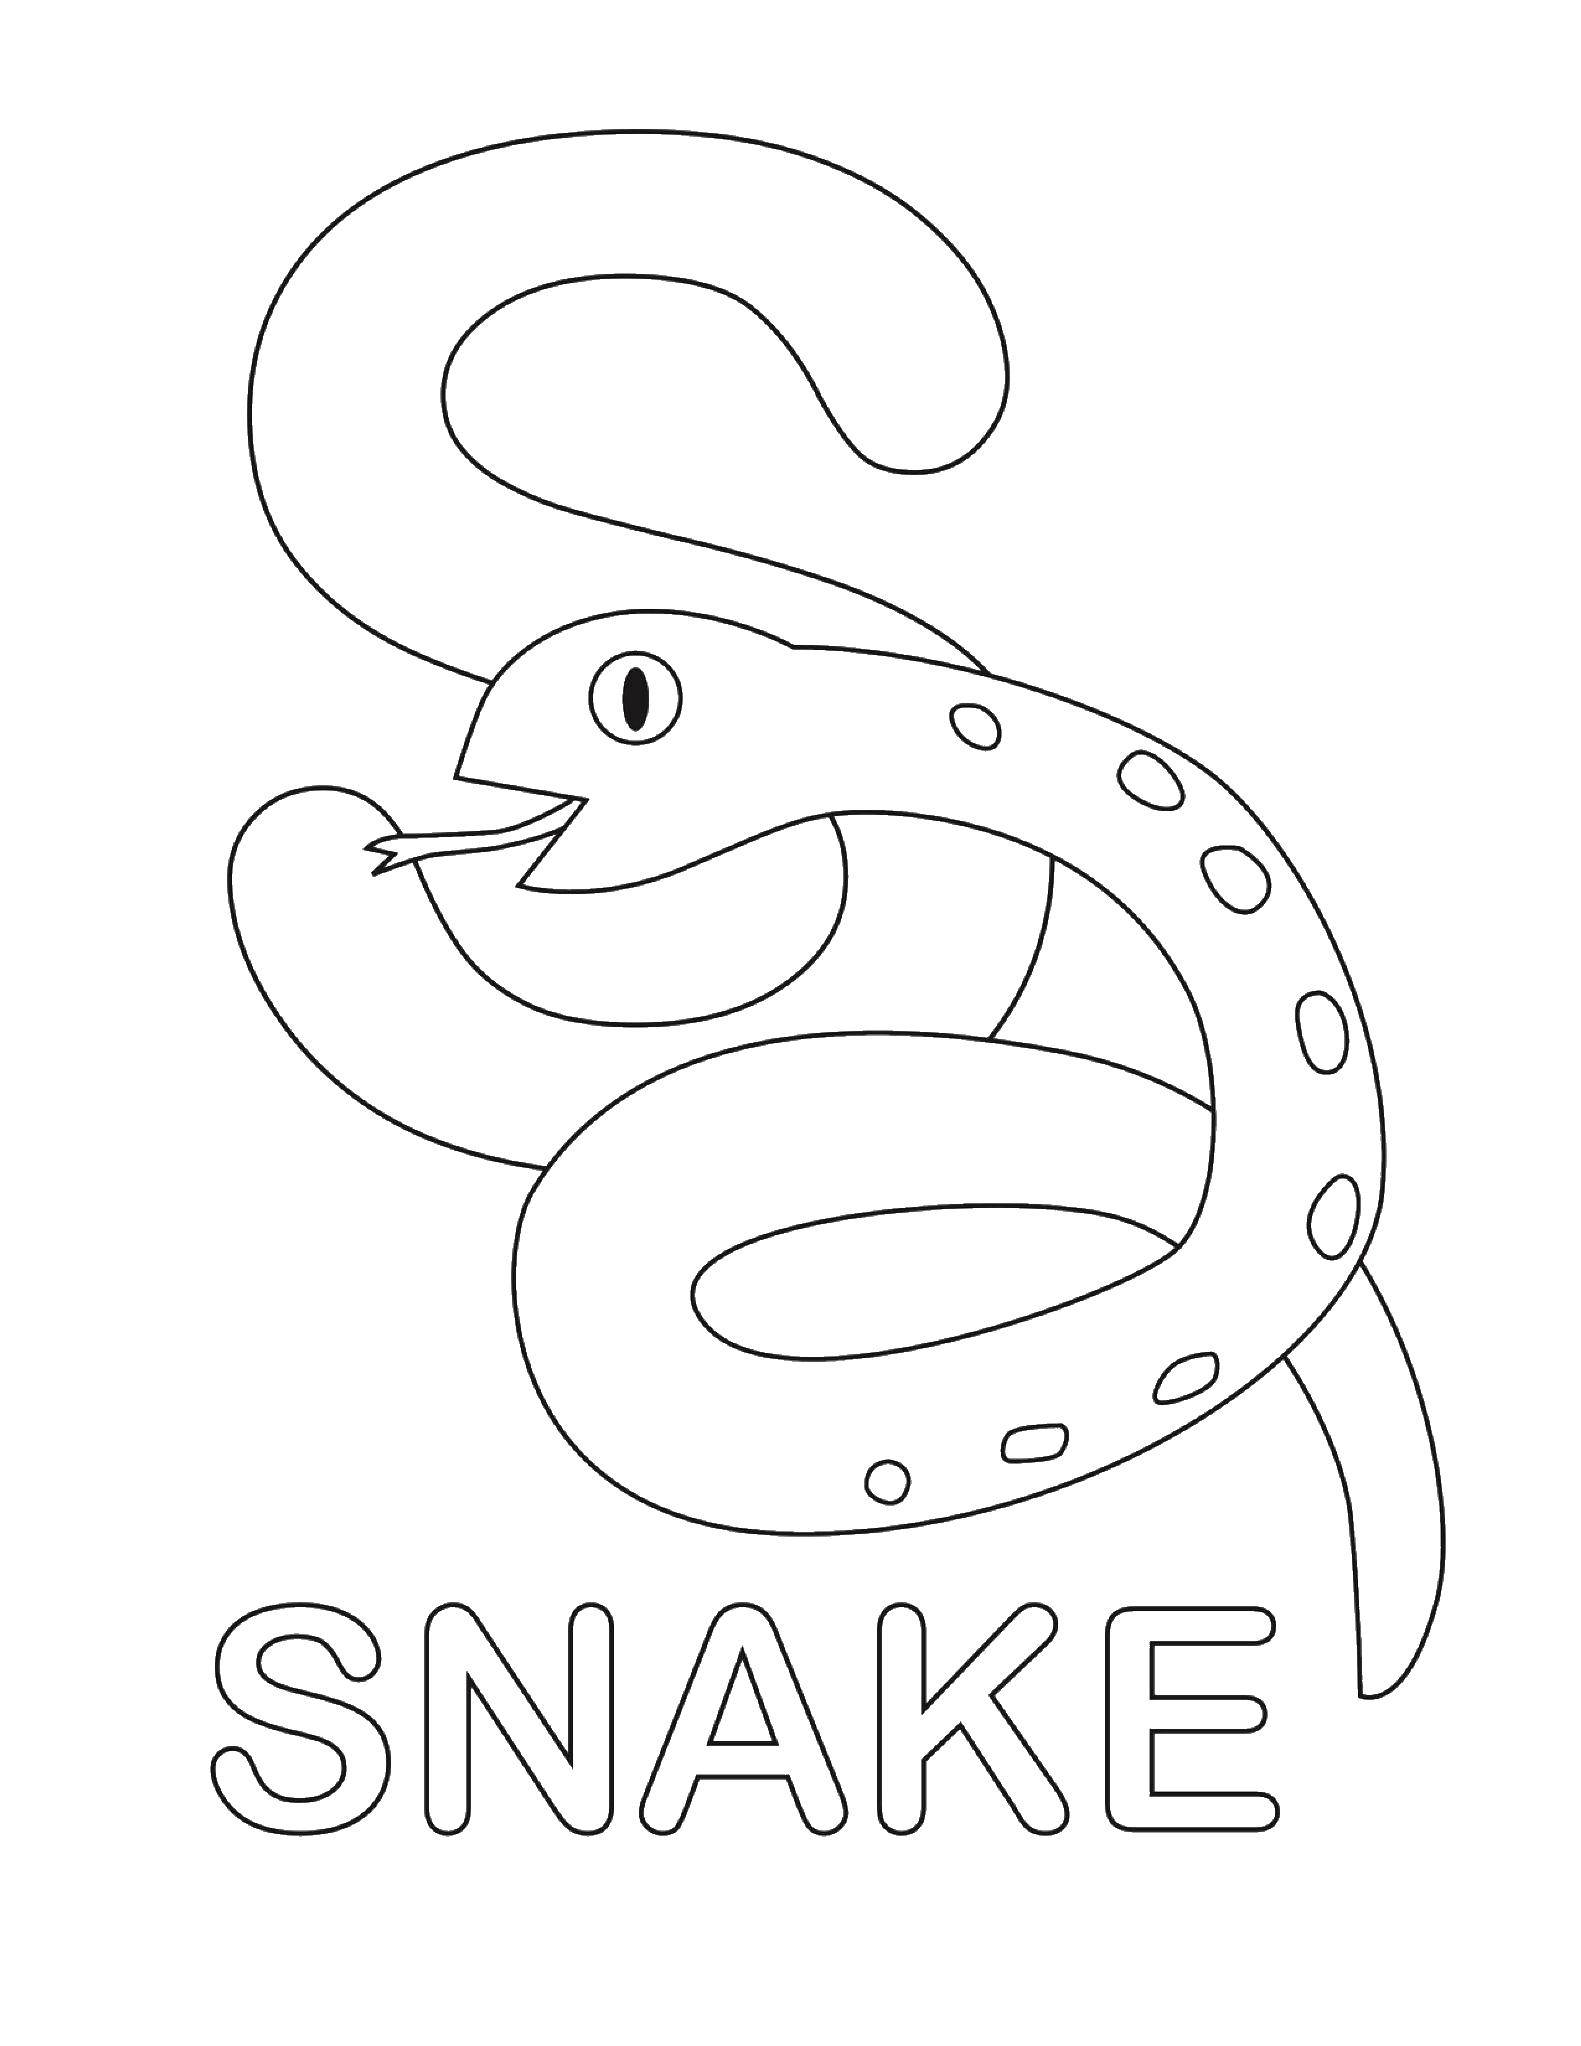 Название: Раскраска Змея. Категория: английские слова. Теги: английские слова, змея.